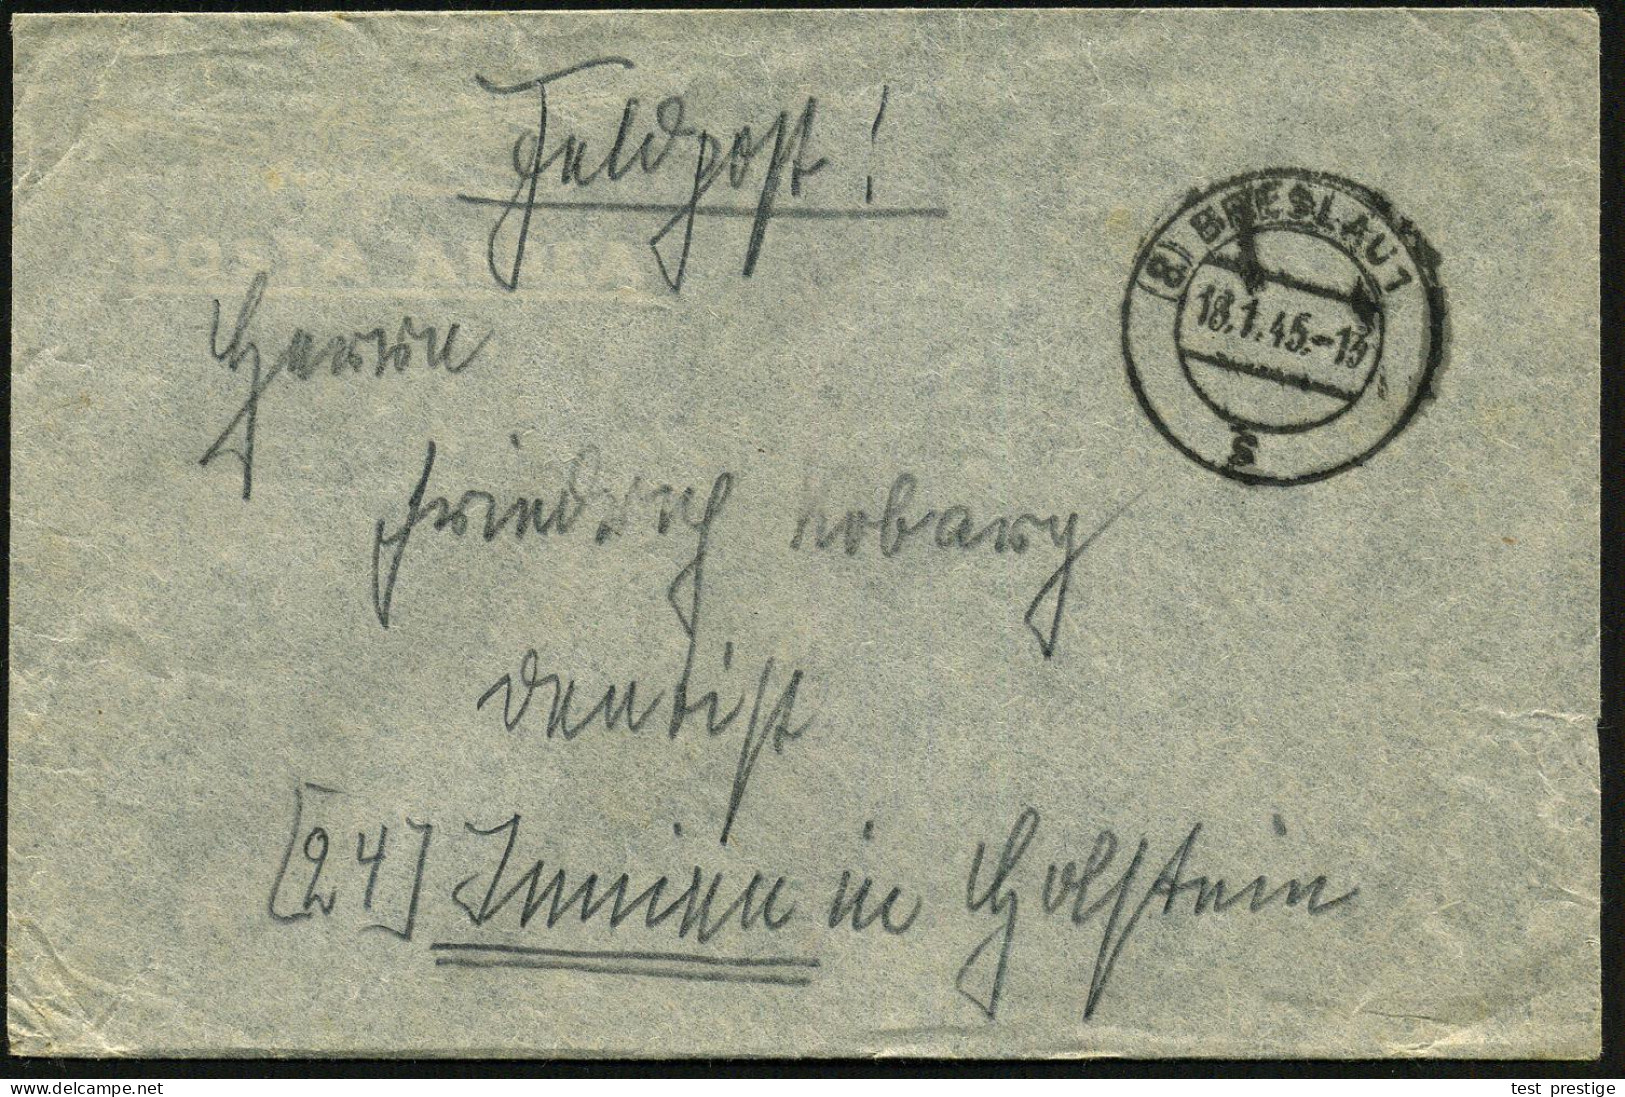 (8) BRESLAU 1/ S 1945 (18.1.) 2K-Steg Mit Postleitzahl ! + Rs. Hs. Fp.-Abs.: "..Leutnant.. Z. Zt. Breslau, Gren.(adier)  - WO2